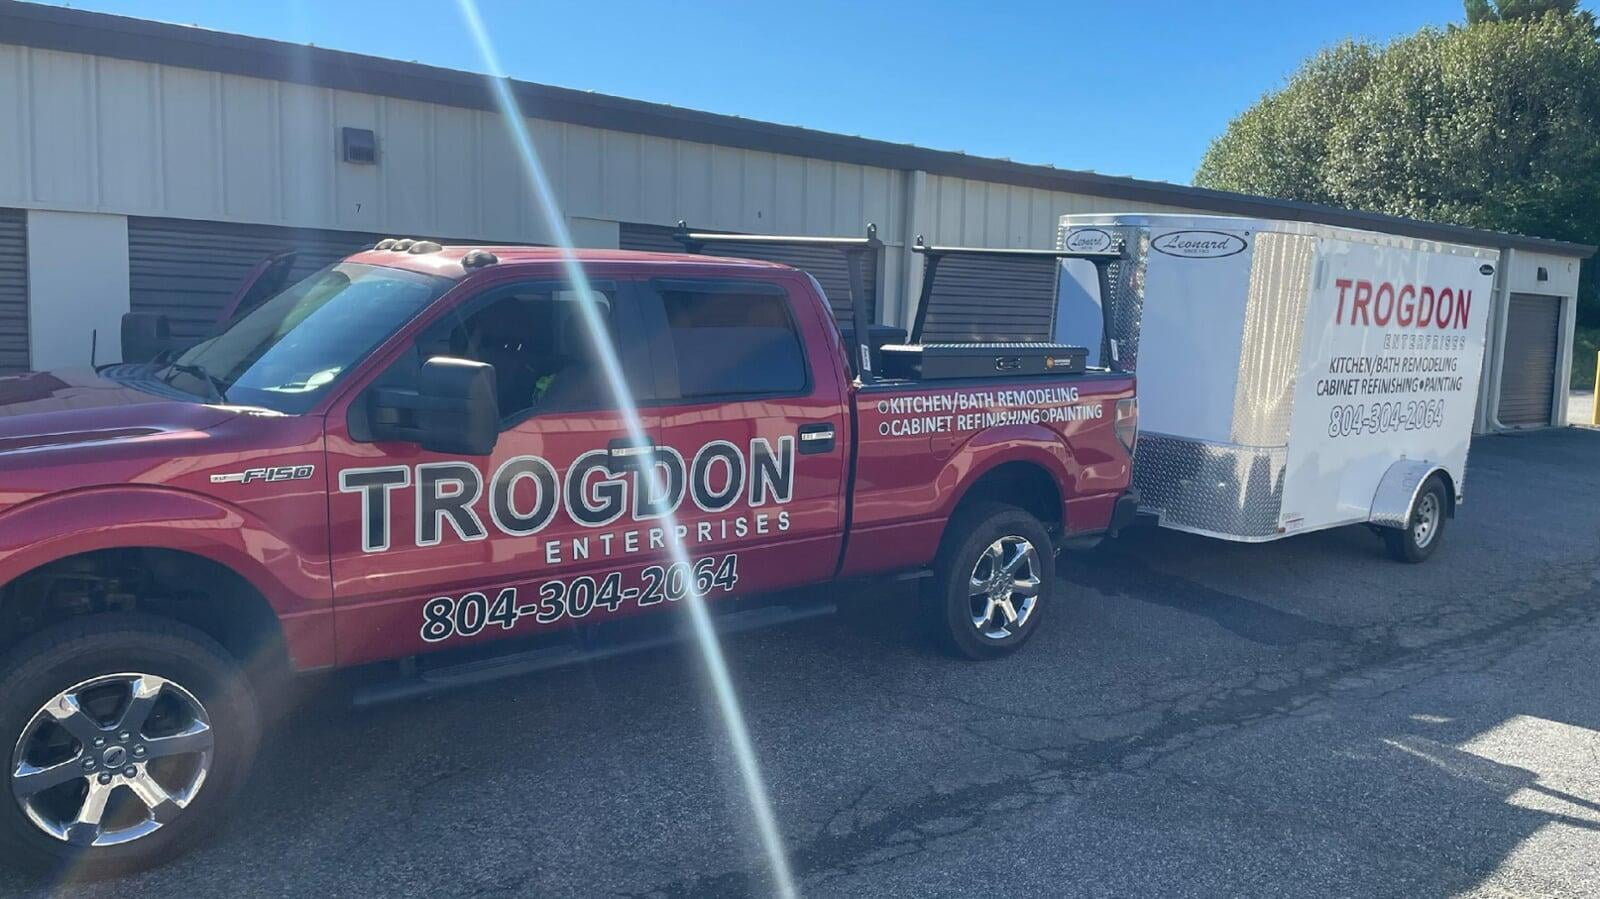 Trogdon Enterprises company work van. Chesterfield, VA.